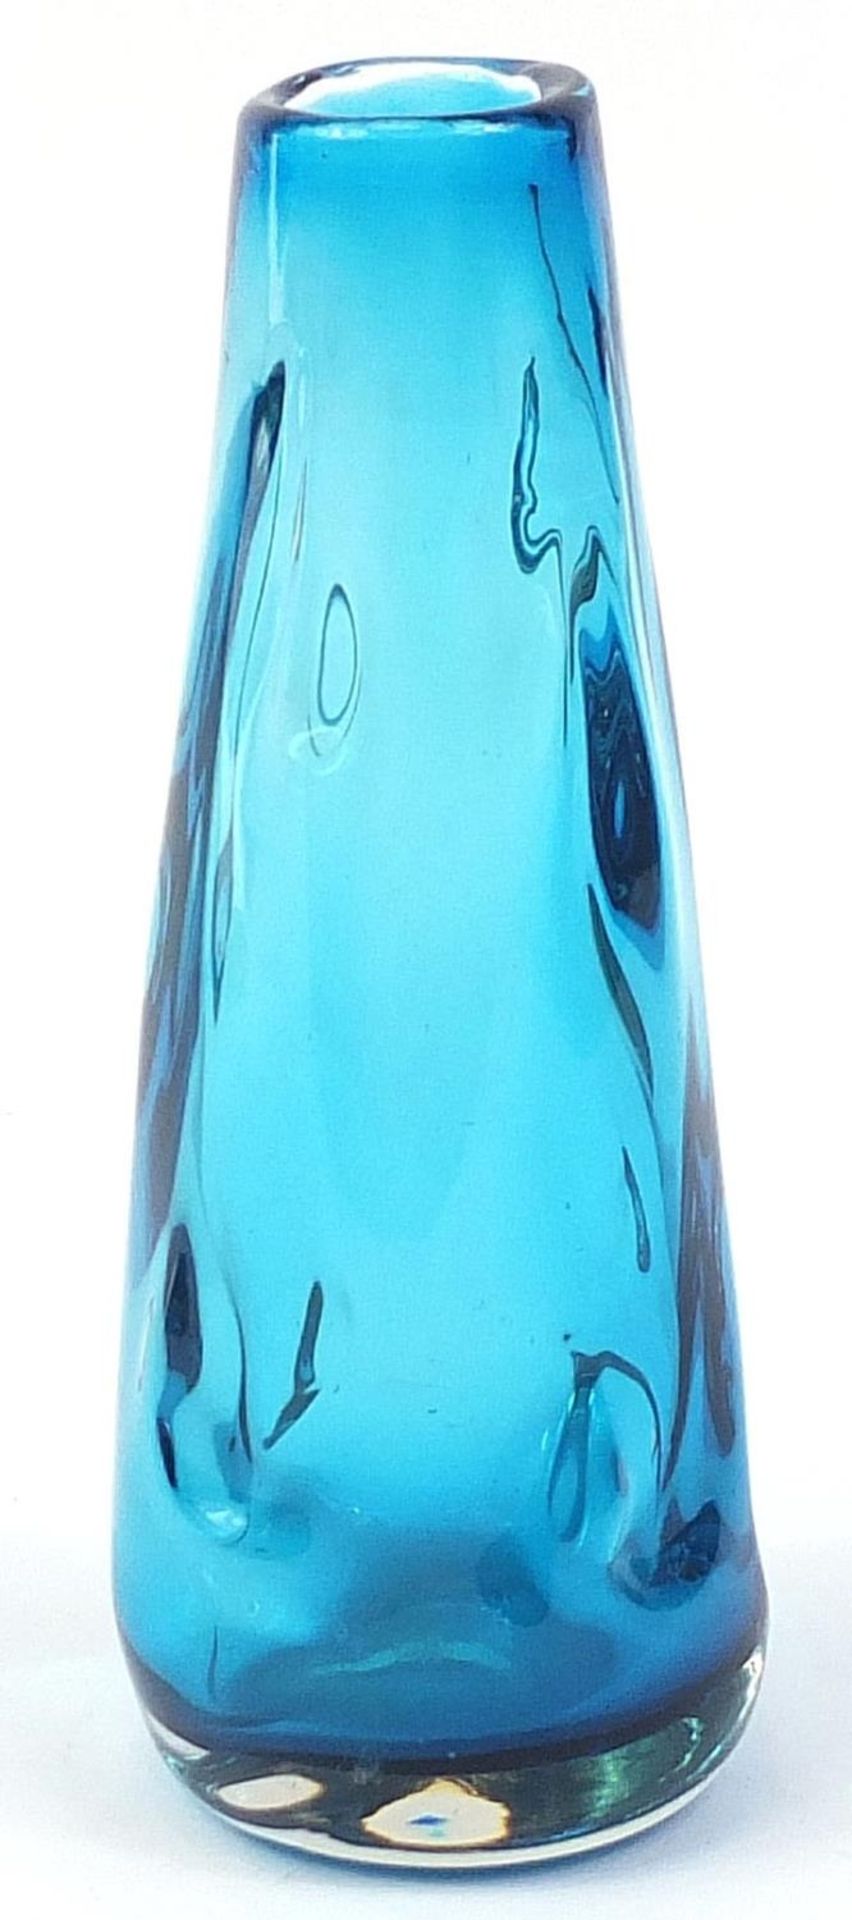 Whitefriars aqua blue knobbly glass vase, 25cm high - Image 2 of 3